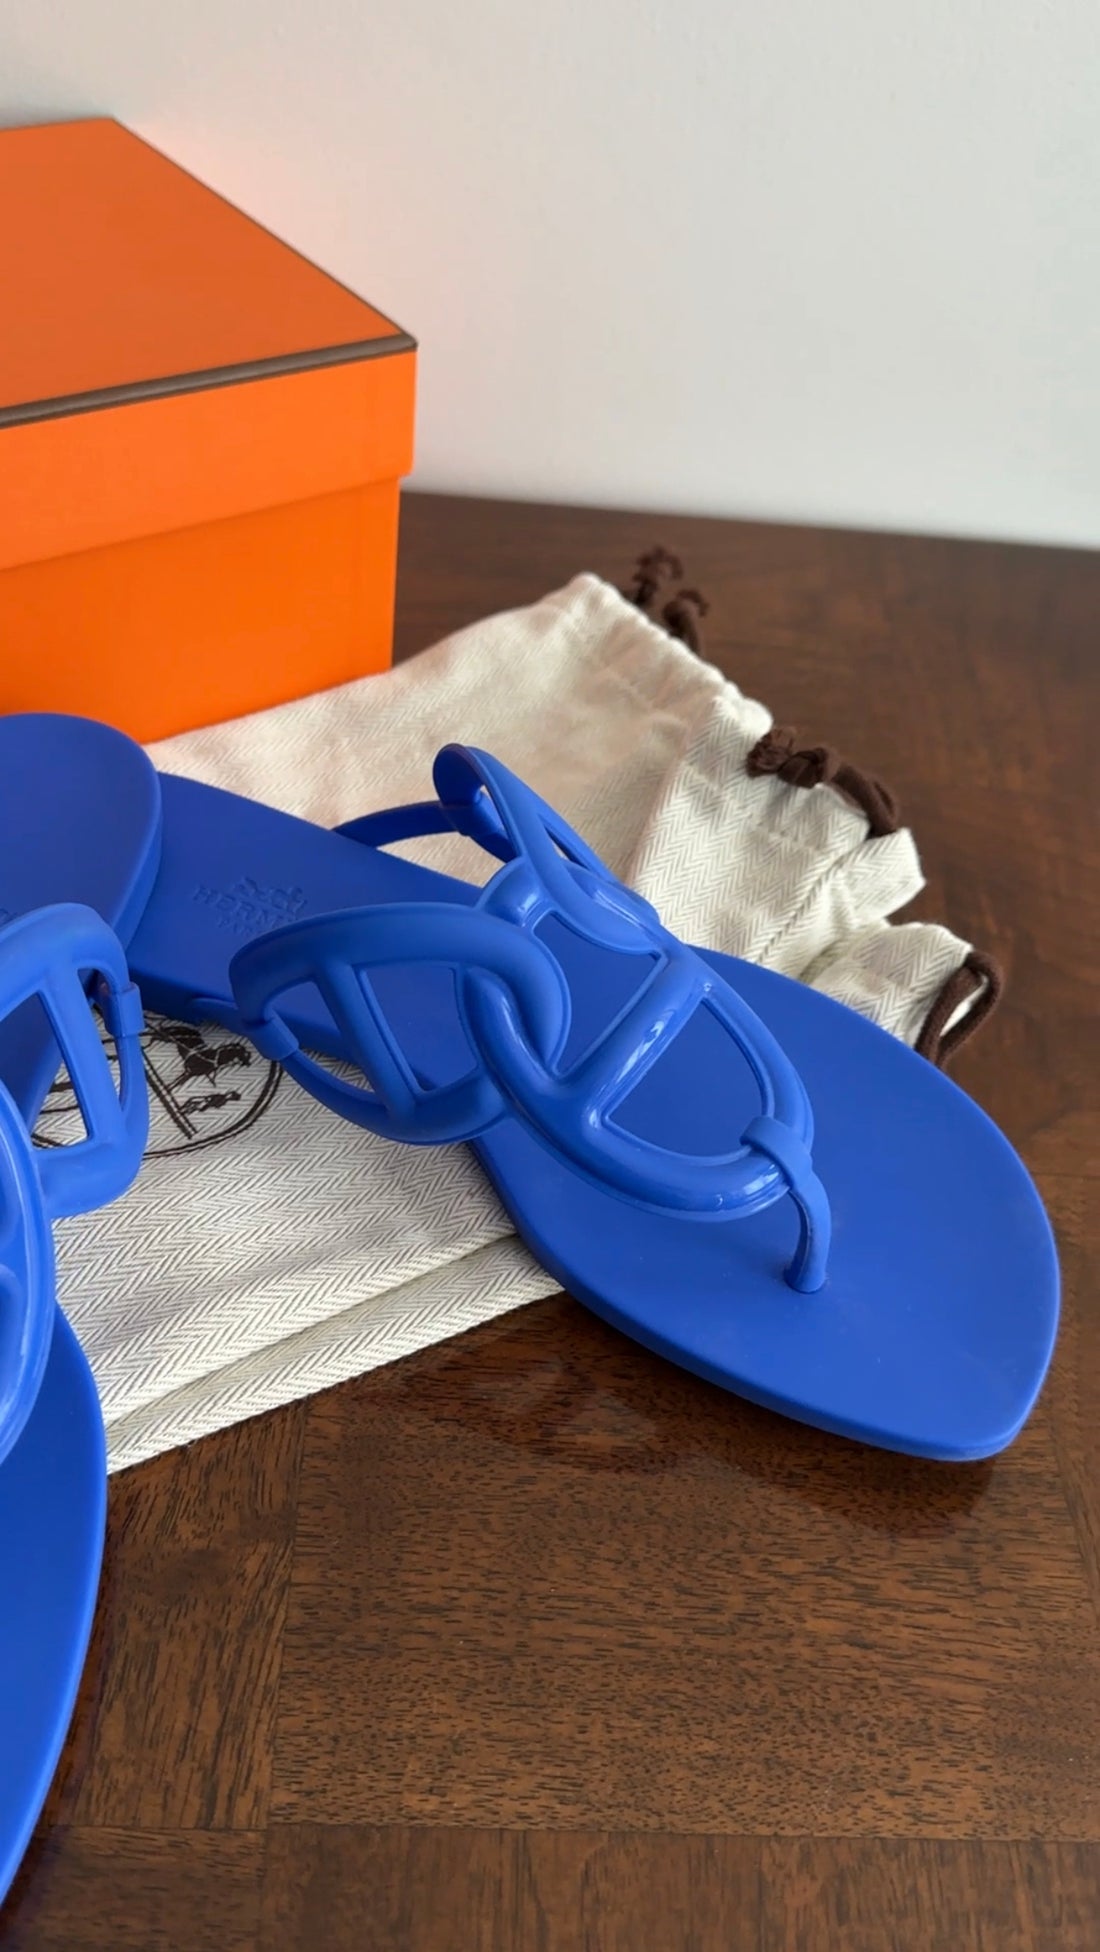 Hermes Blue Rubber Egerie Flat Sandals - 39 / 8.5